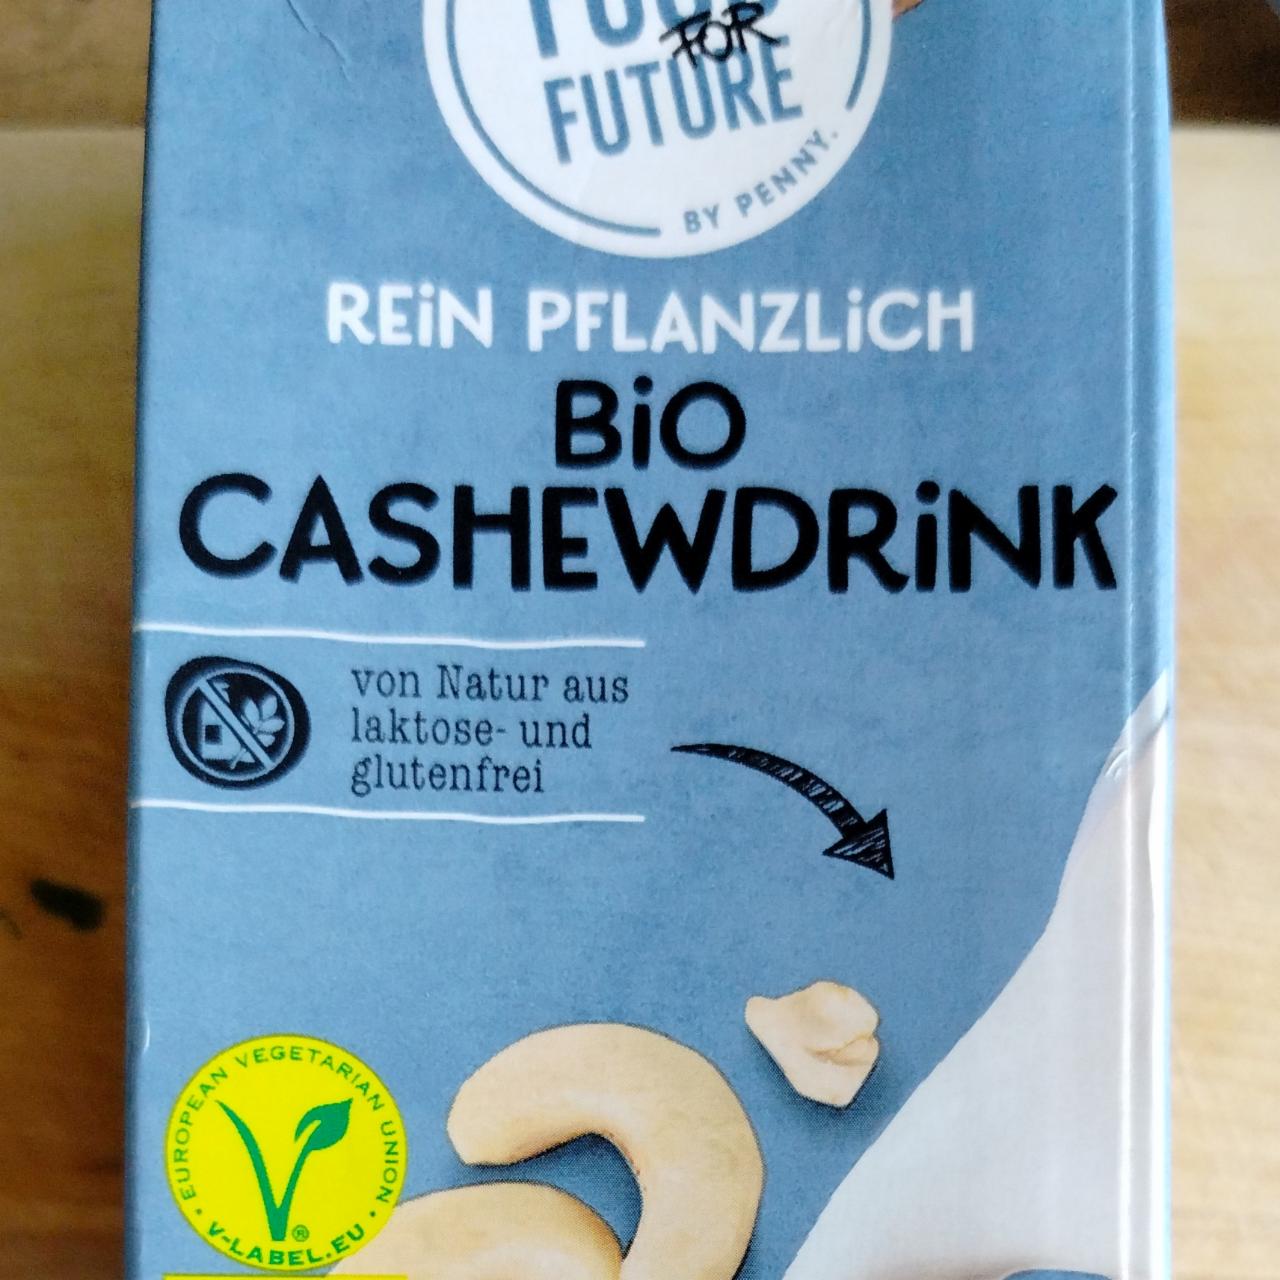 Fotografie - Bio Cashewdrink Food for Future